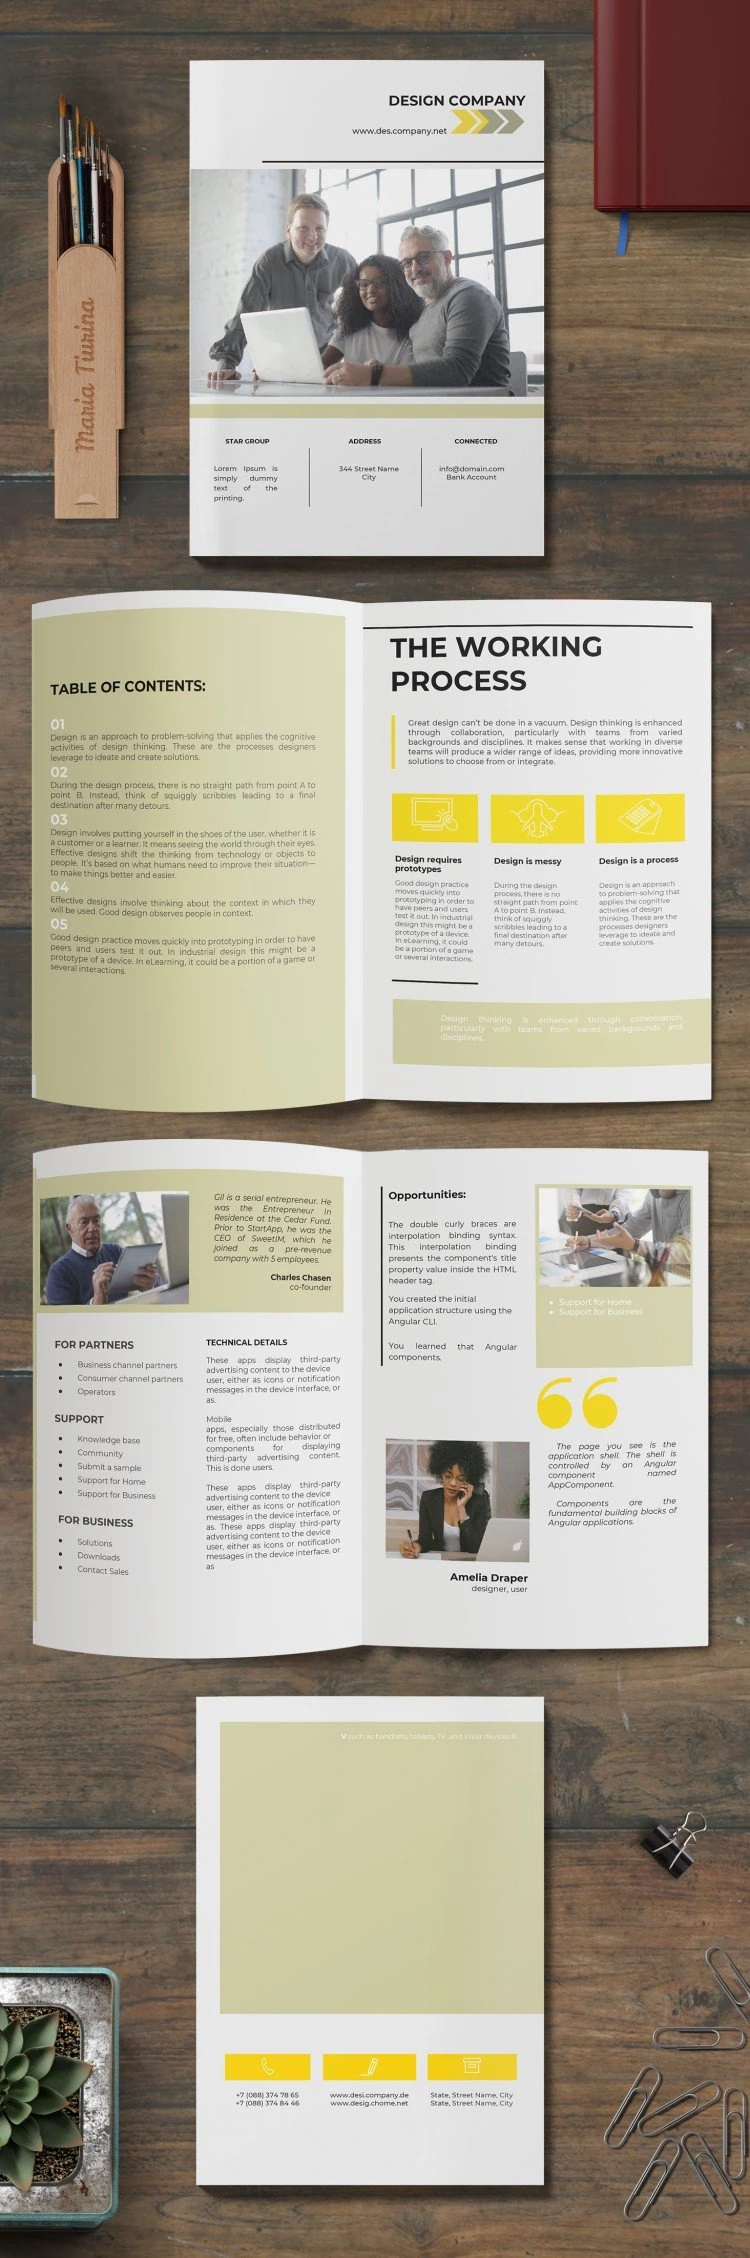 Design Company Brochure - free Google Docs Template - 10061479